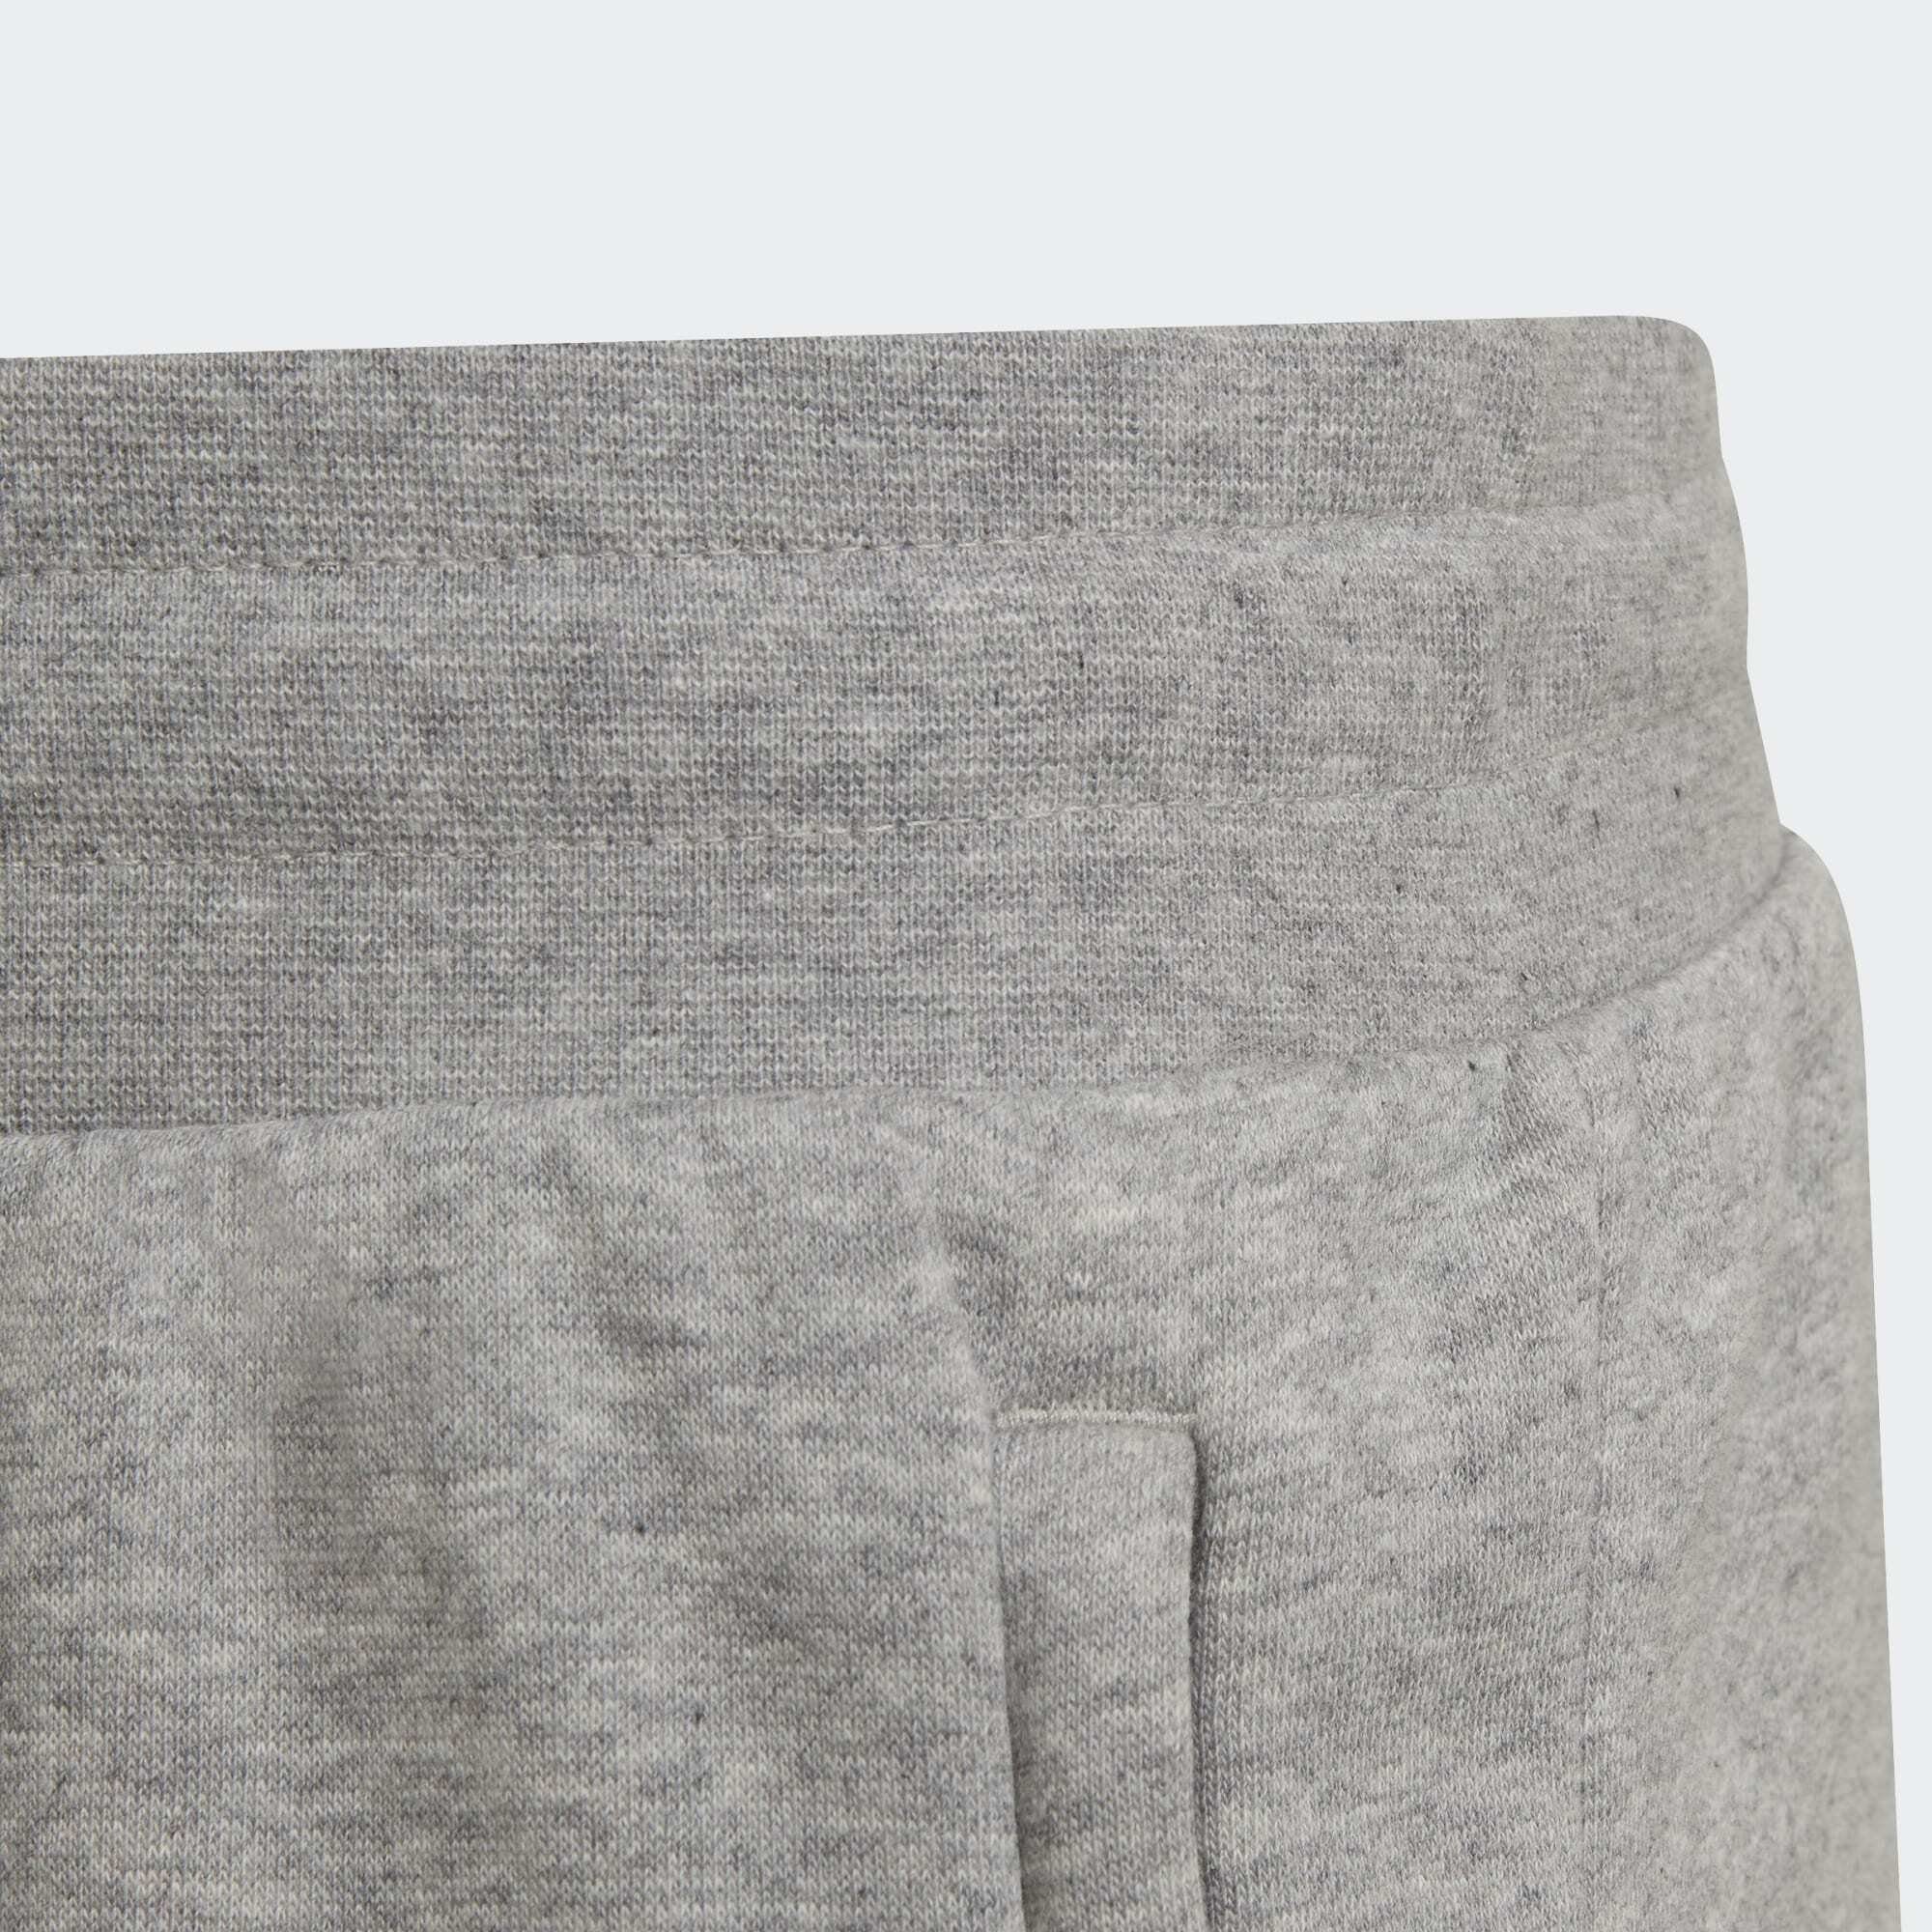 ADICOLOR adidas Originals Medium Shorts Grey Heather SHORTS